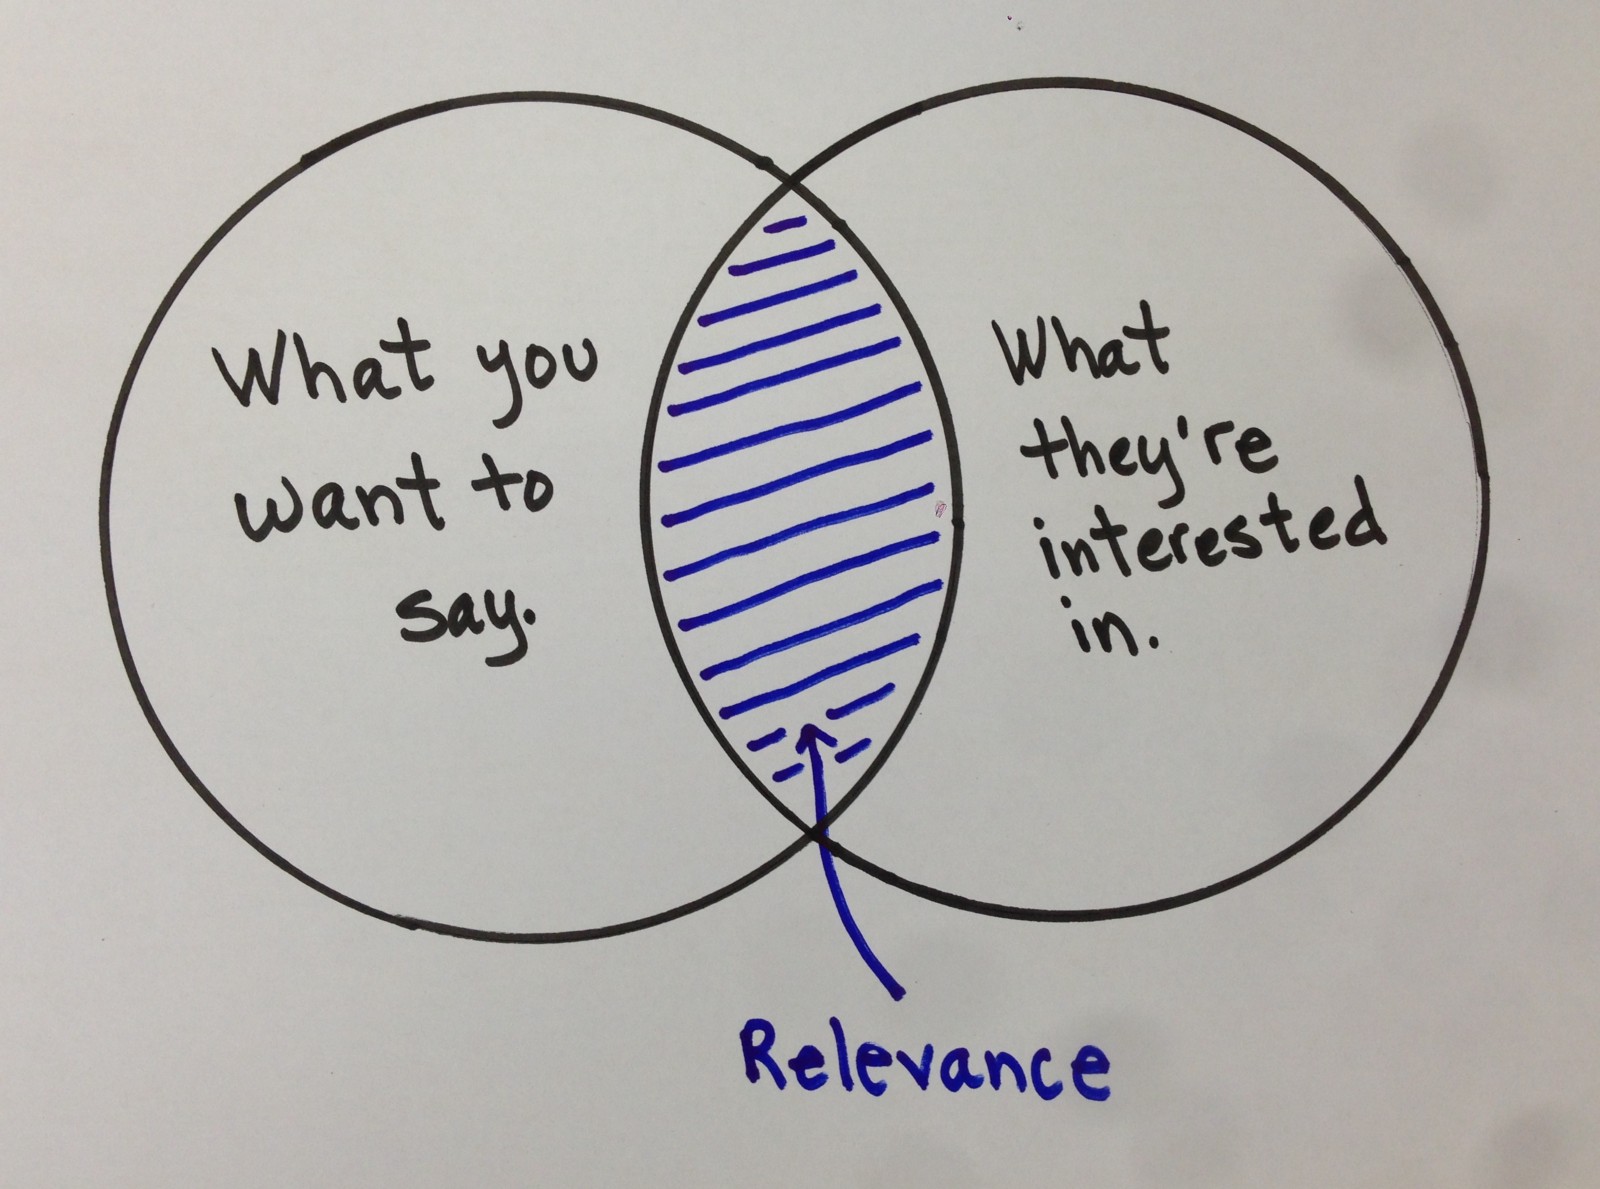 A handy Venn diagram summarizing how relevance works on Google.